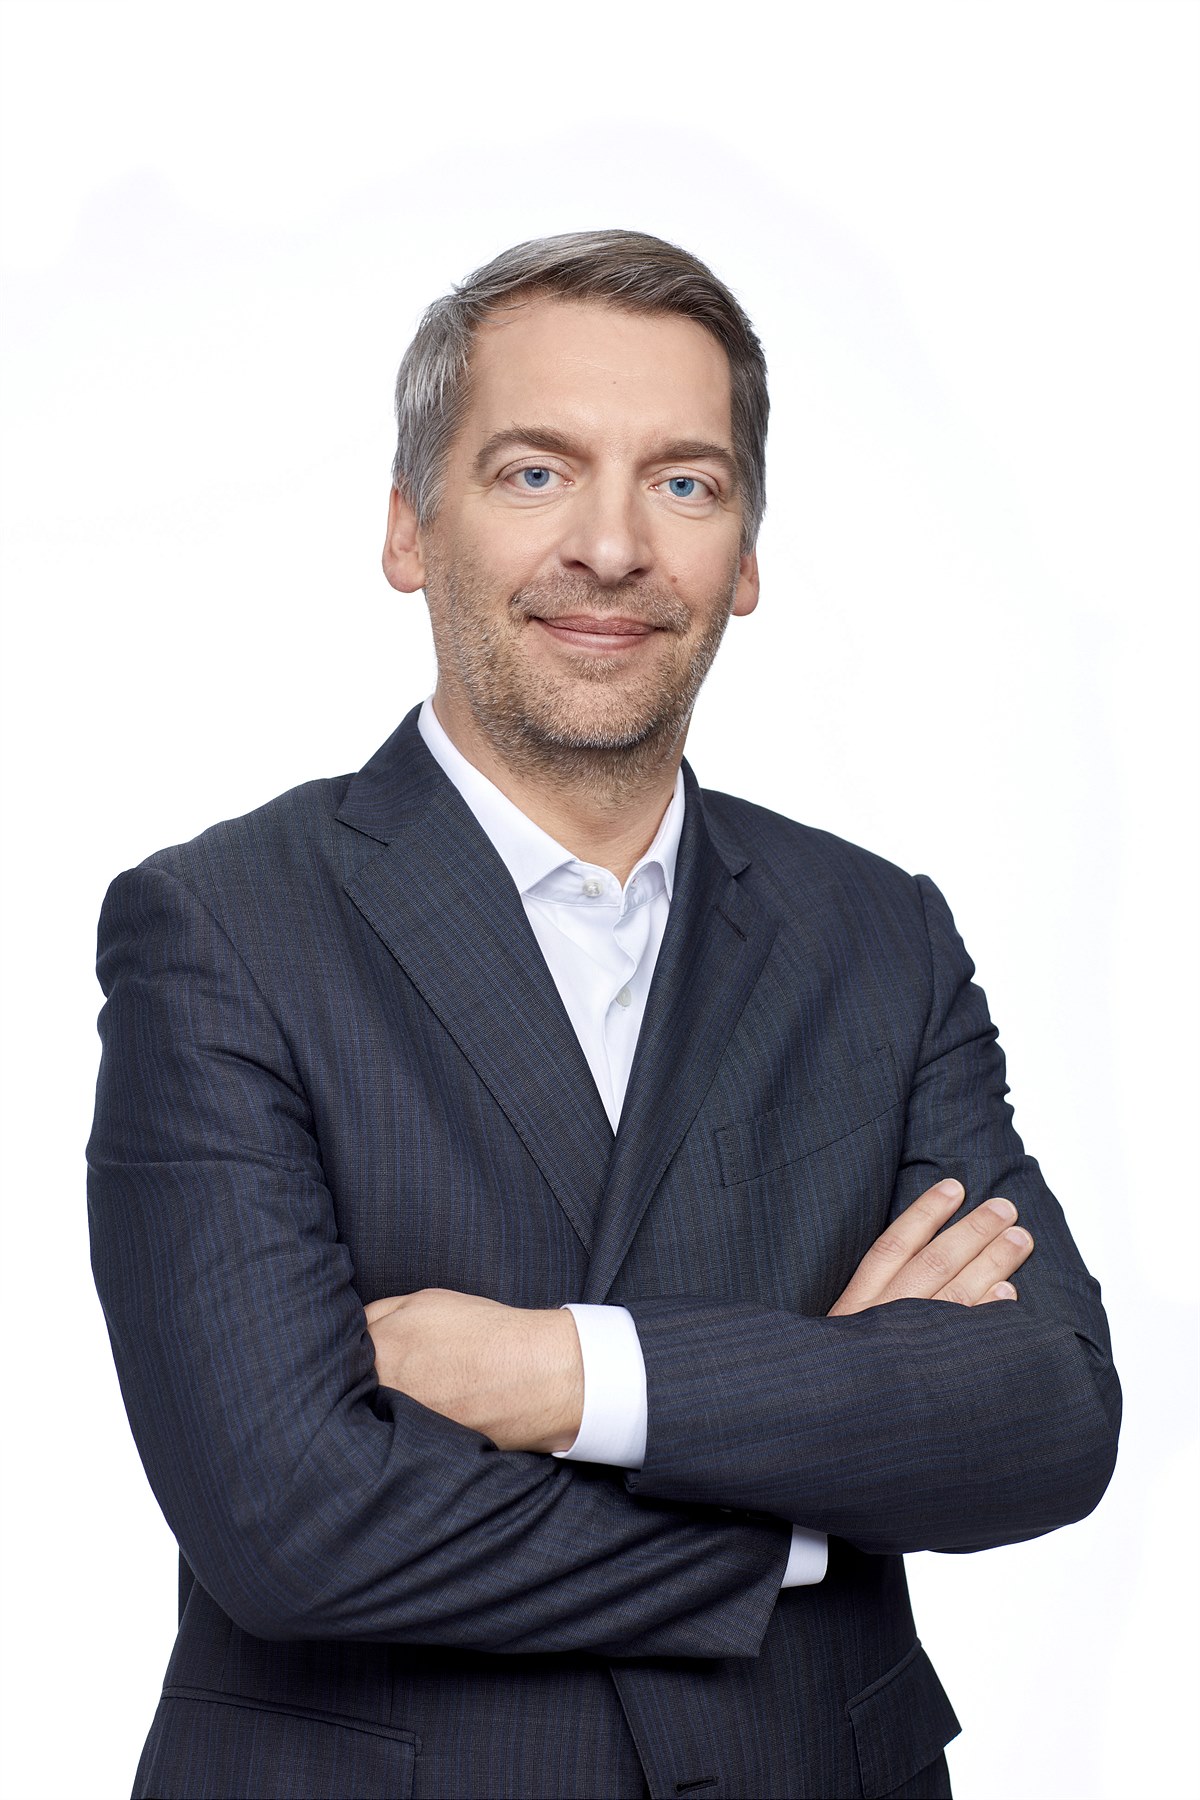 Andreas Hladky, Partner und Digital Consulting Leader bei PwC Österreich